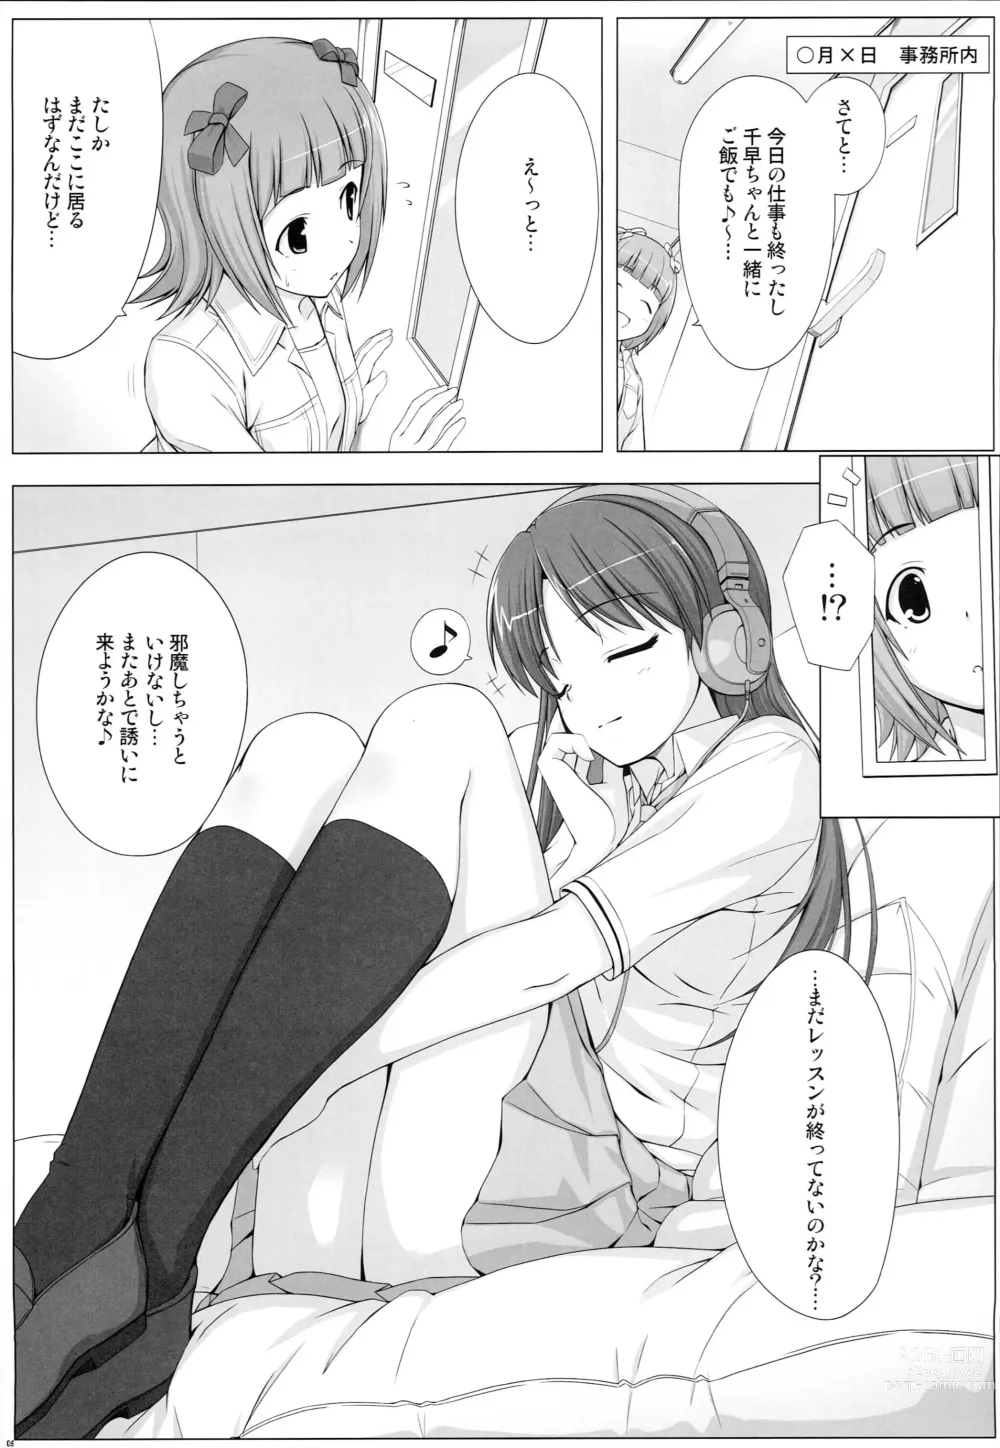 Page 4 of doujinshi BAD COMMUNICATION? 09